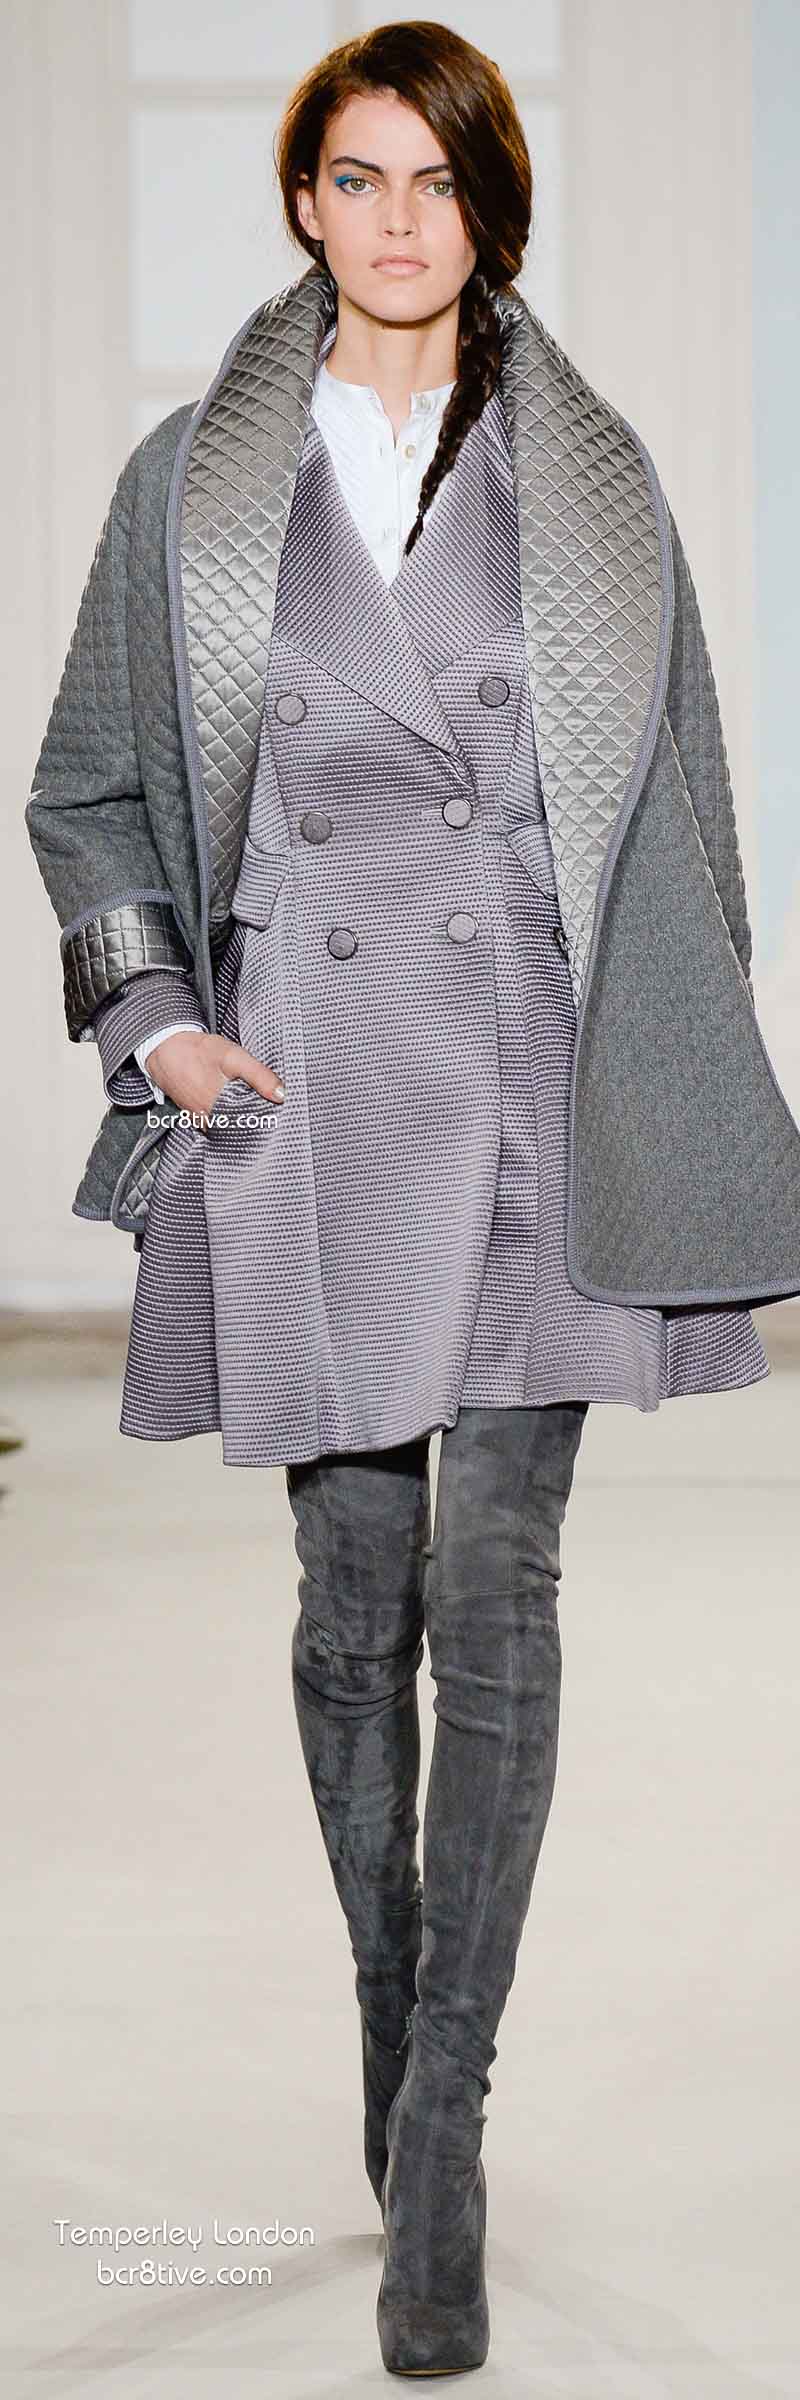 Fall 2014 Menswear Inspired Fashion - Temperley London